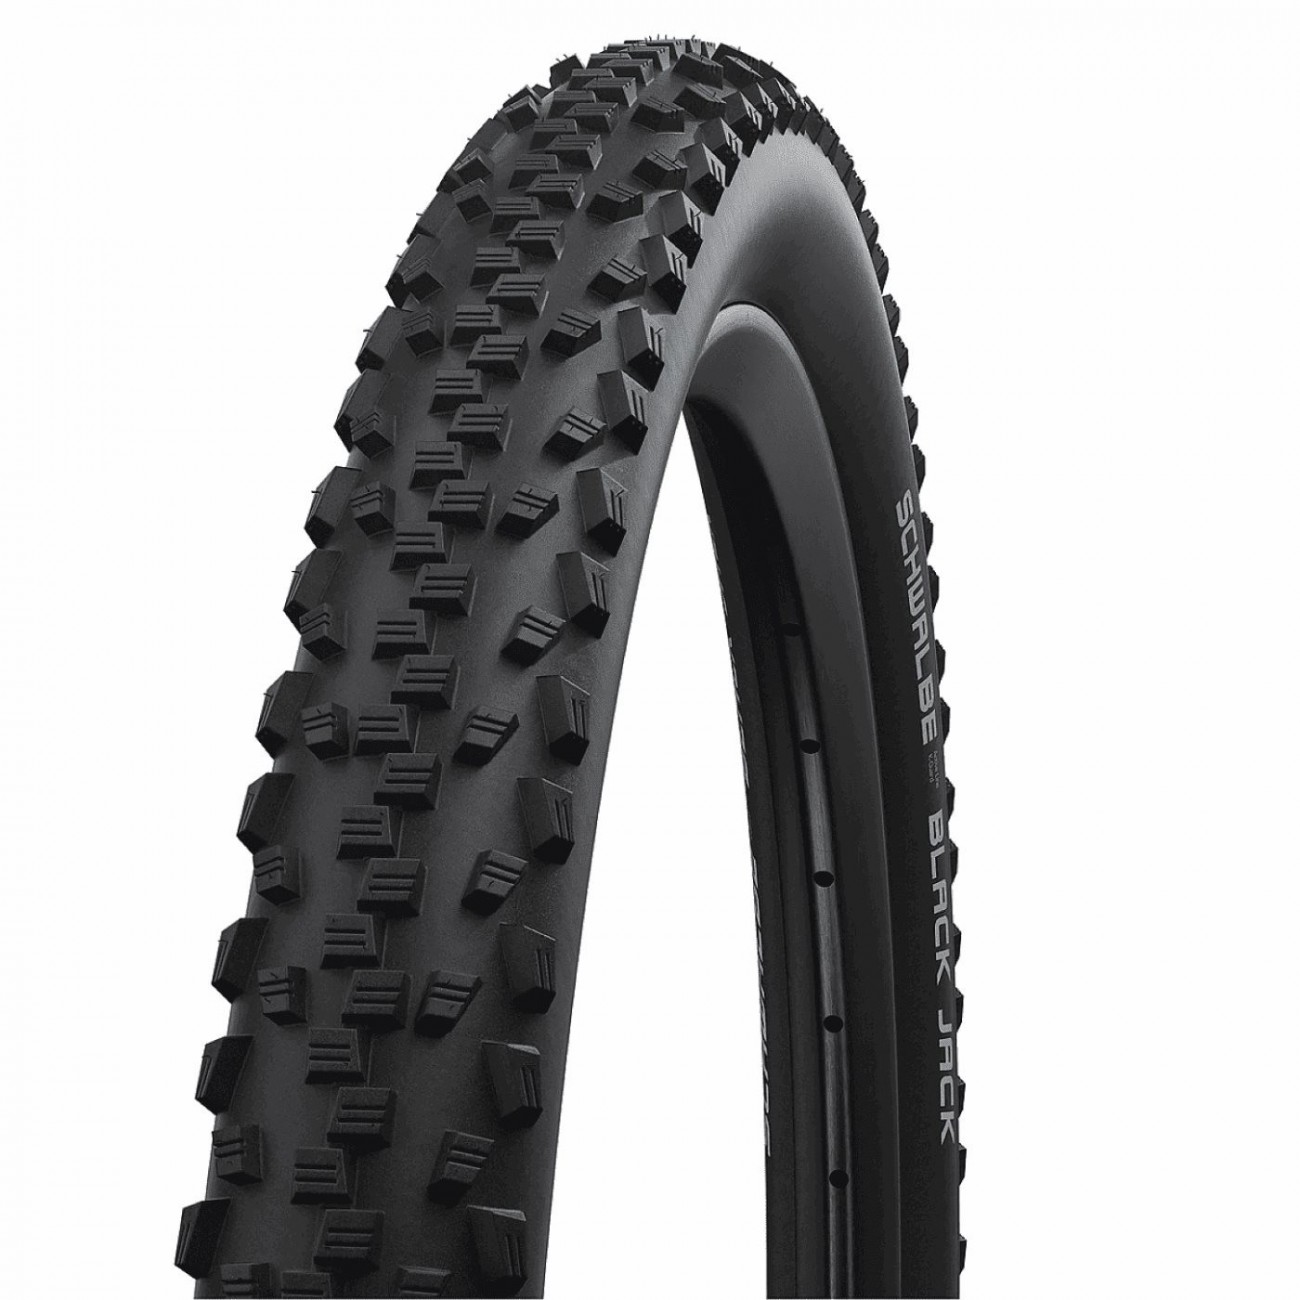 Tire 18" x 1.90 (47-355) black jack rigid black - 1